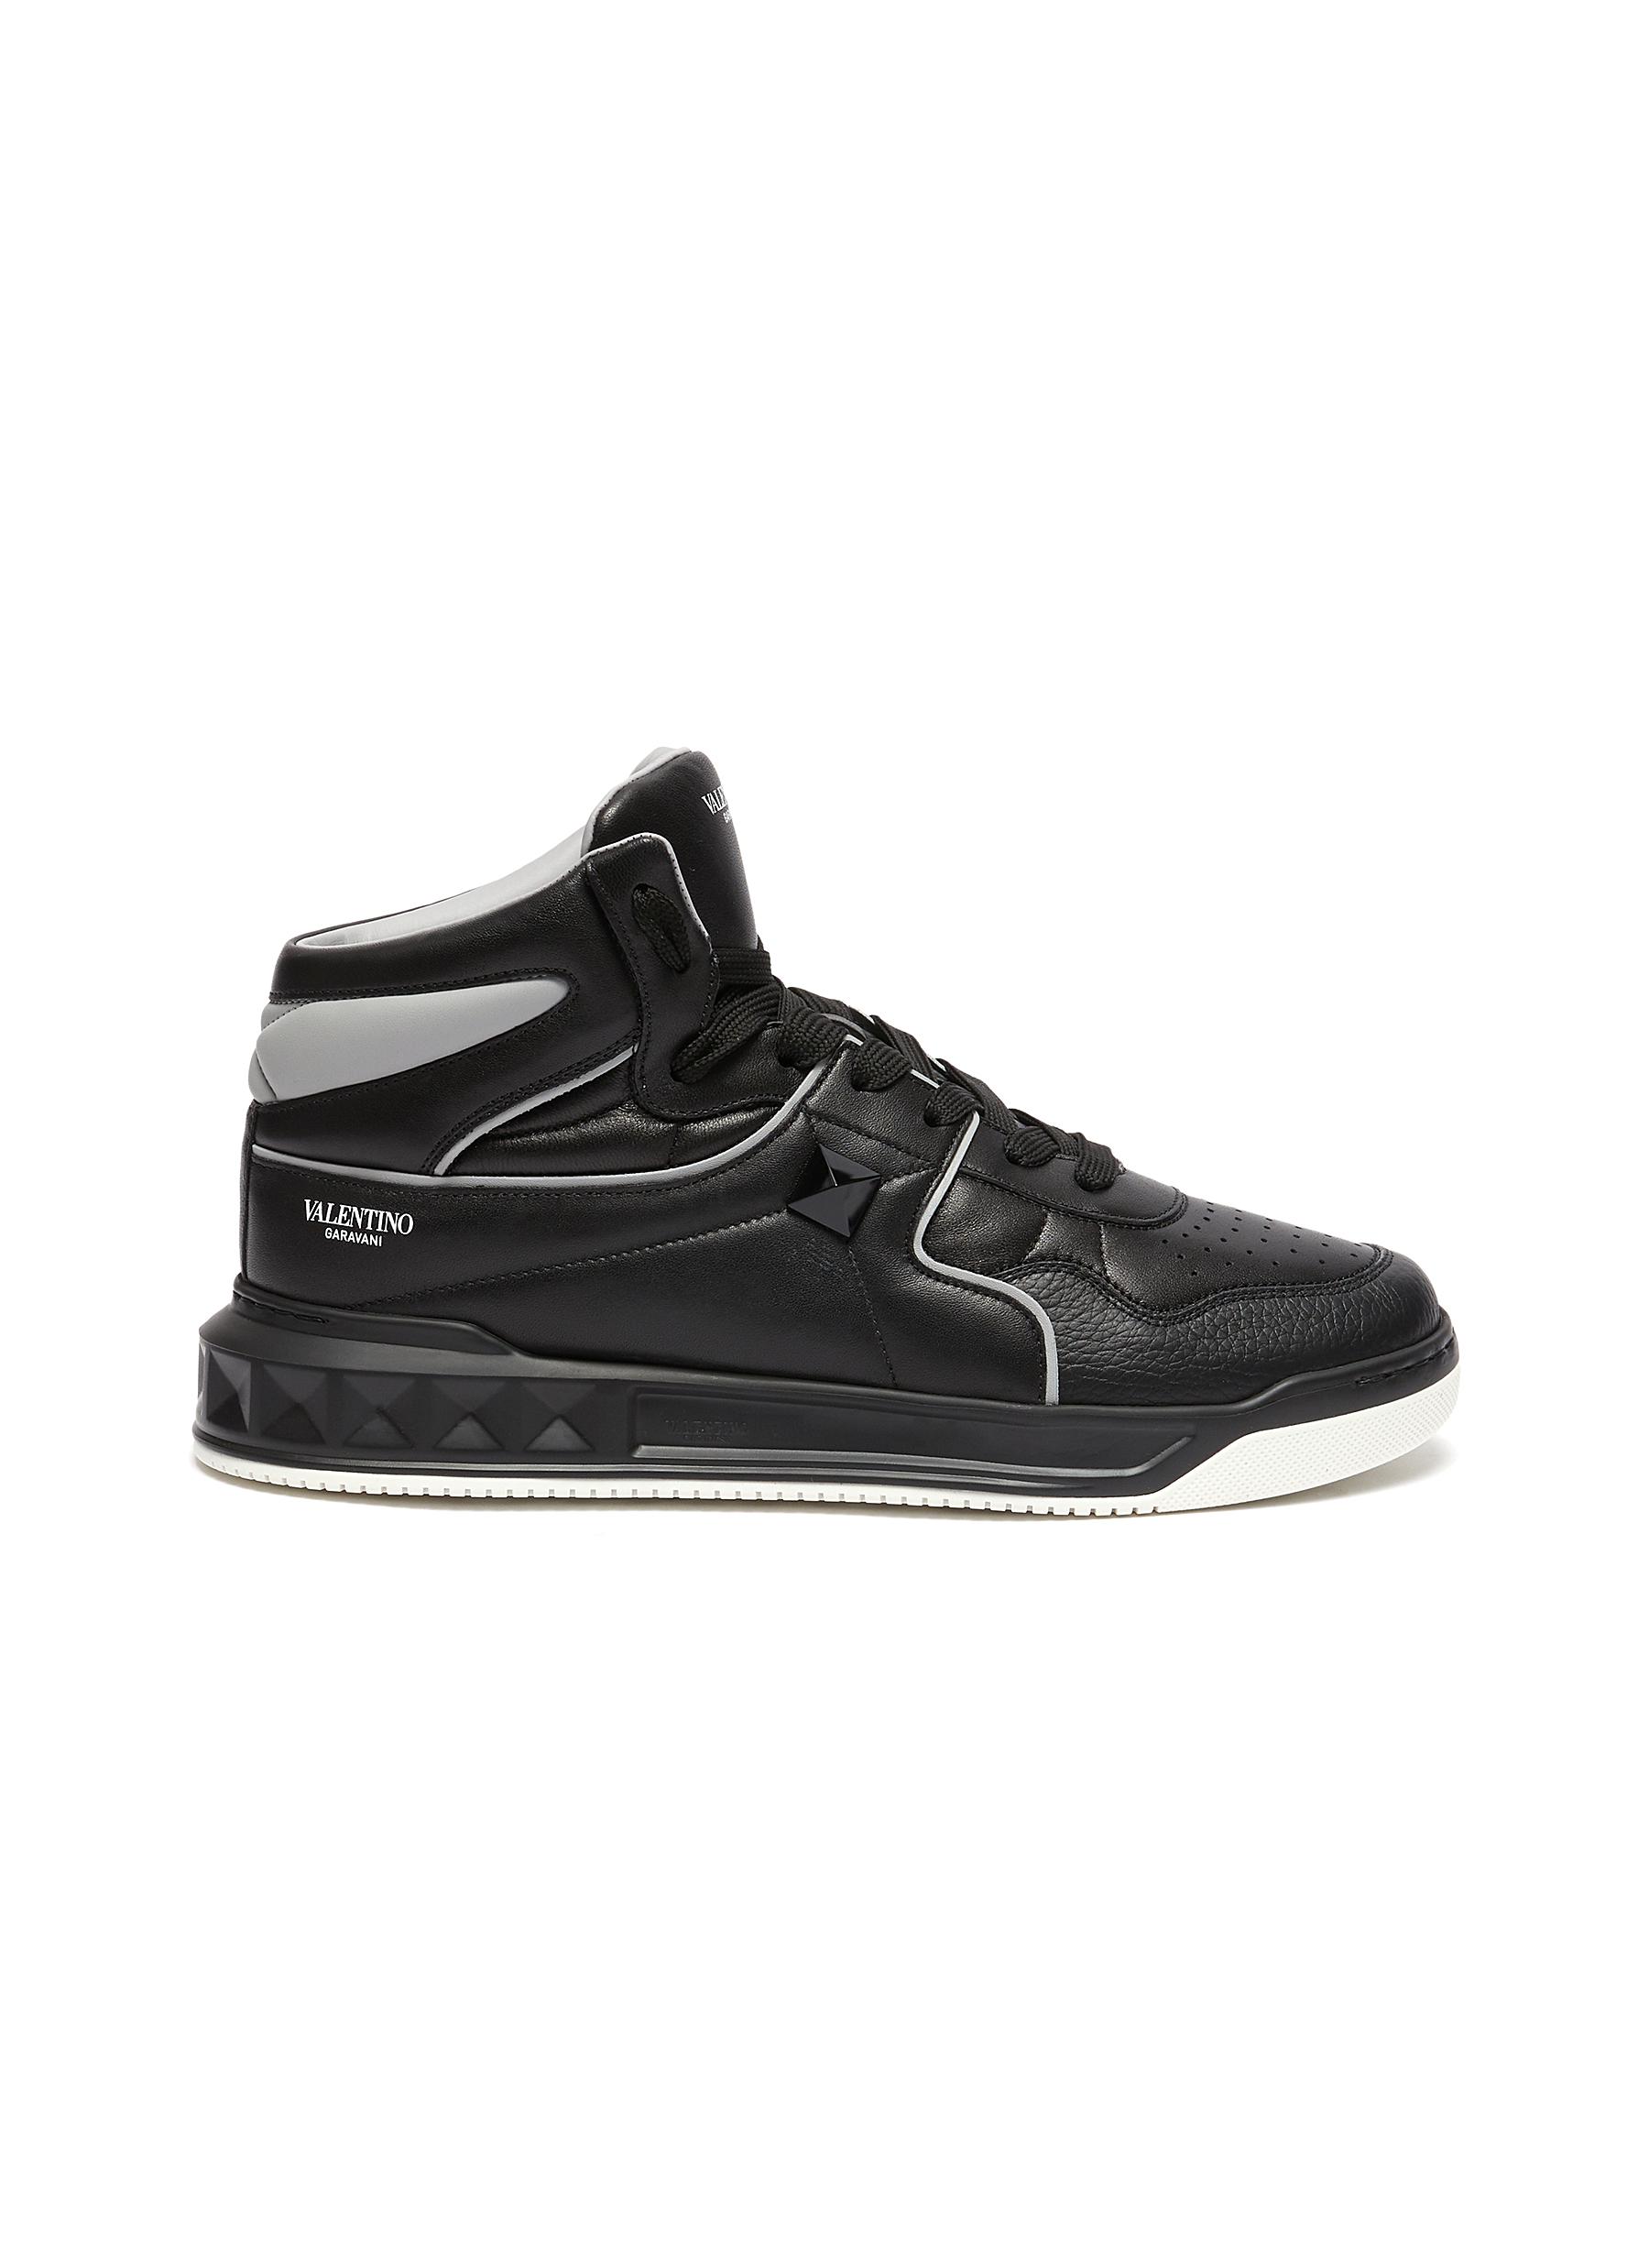 Louis Vuitton LV Trainer Sneaker Boot High Black Grey for Men